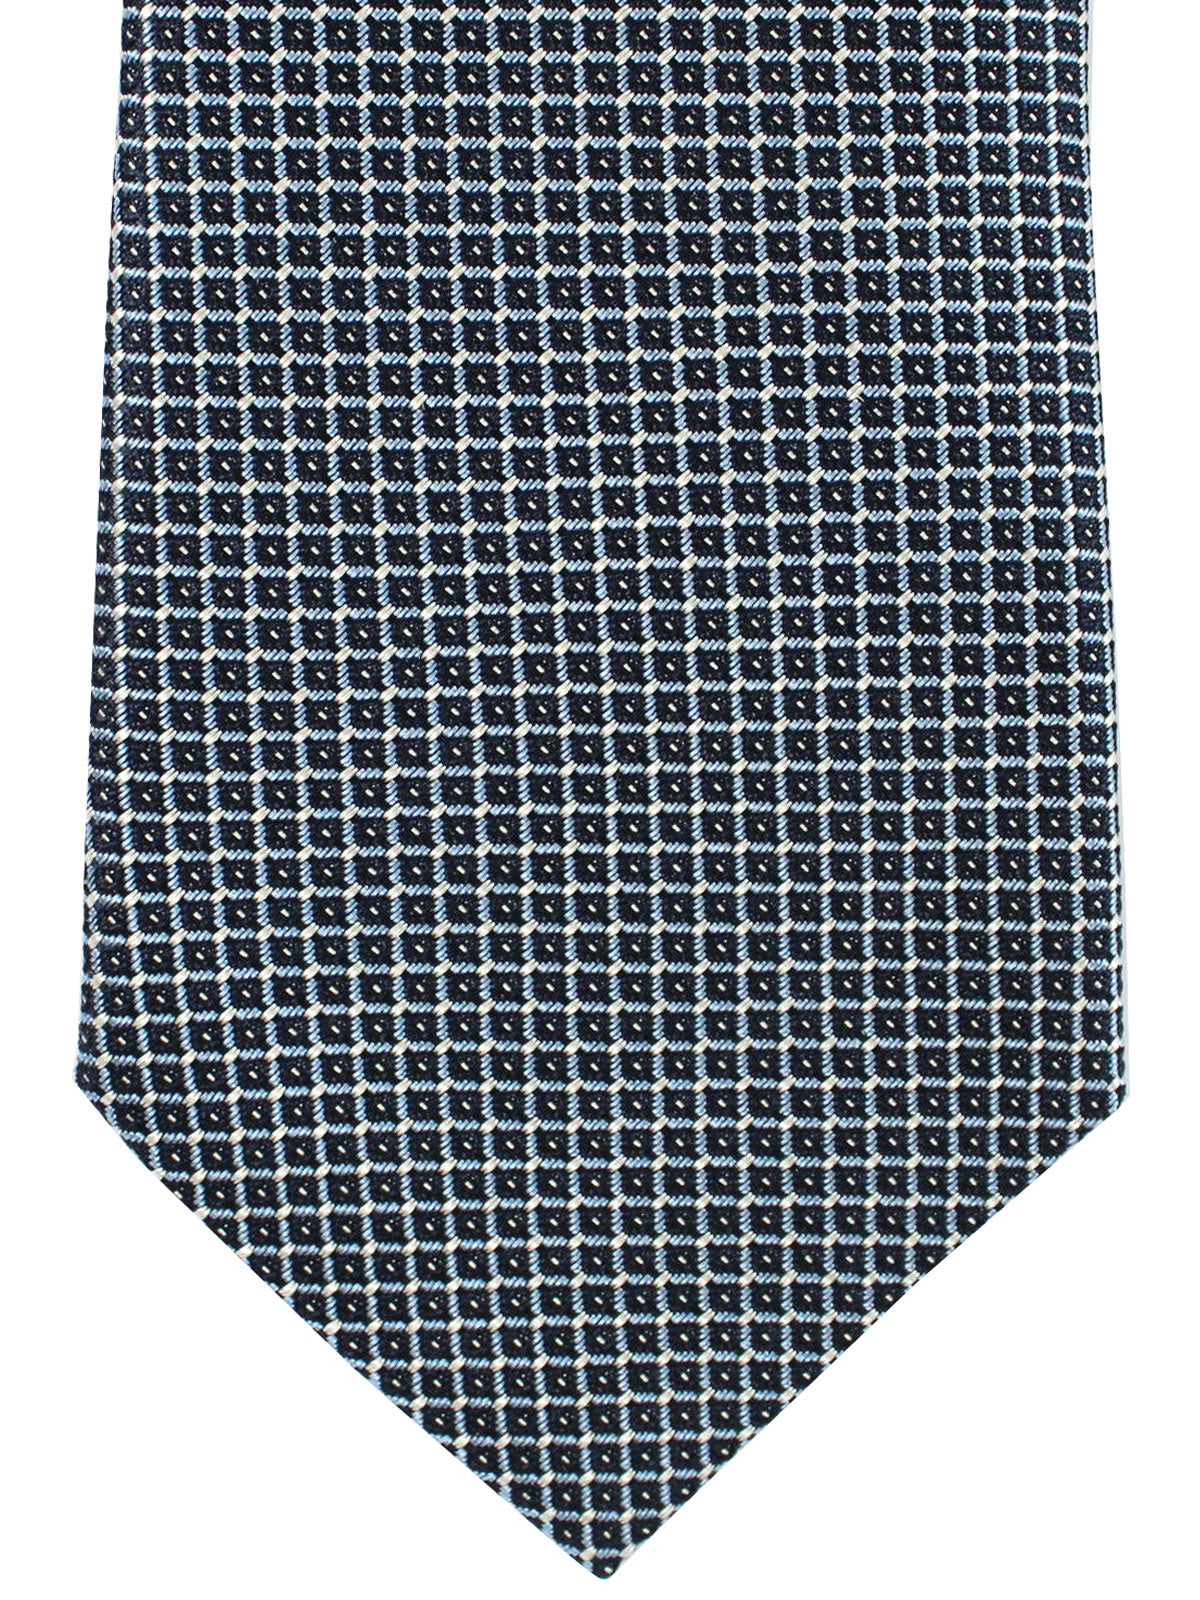 Neckties, Navy & Silver Diamond